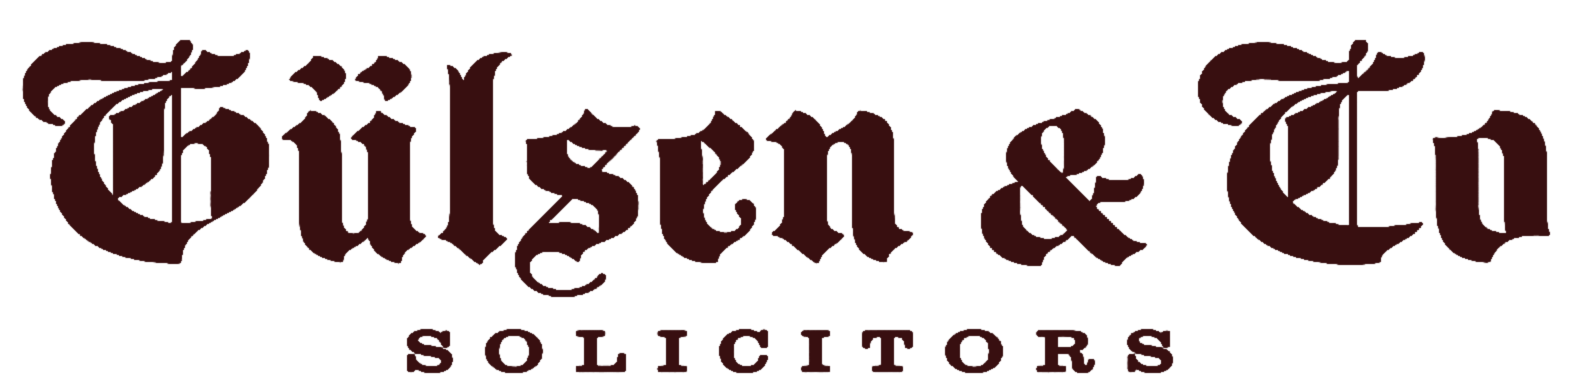 Gulsen & Co. Solicitors Logo